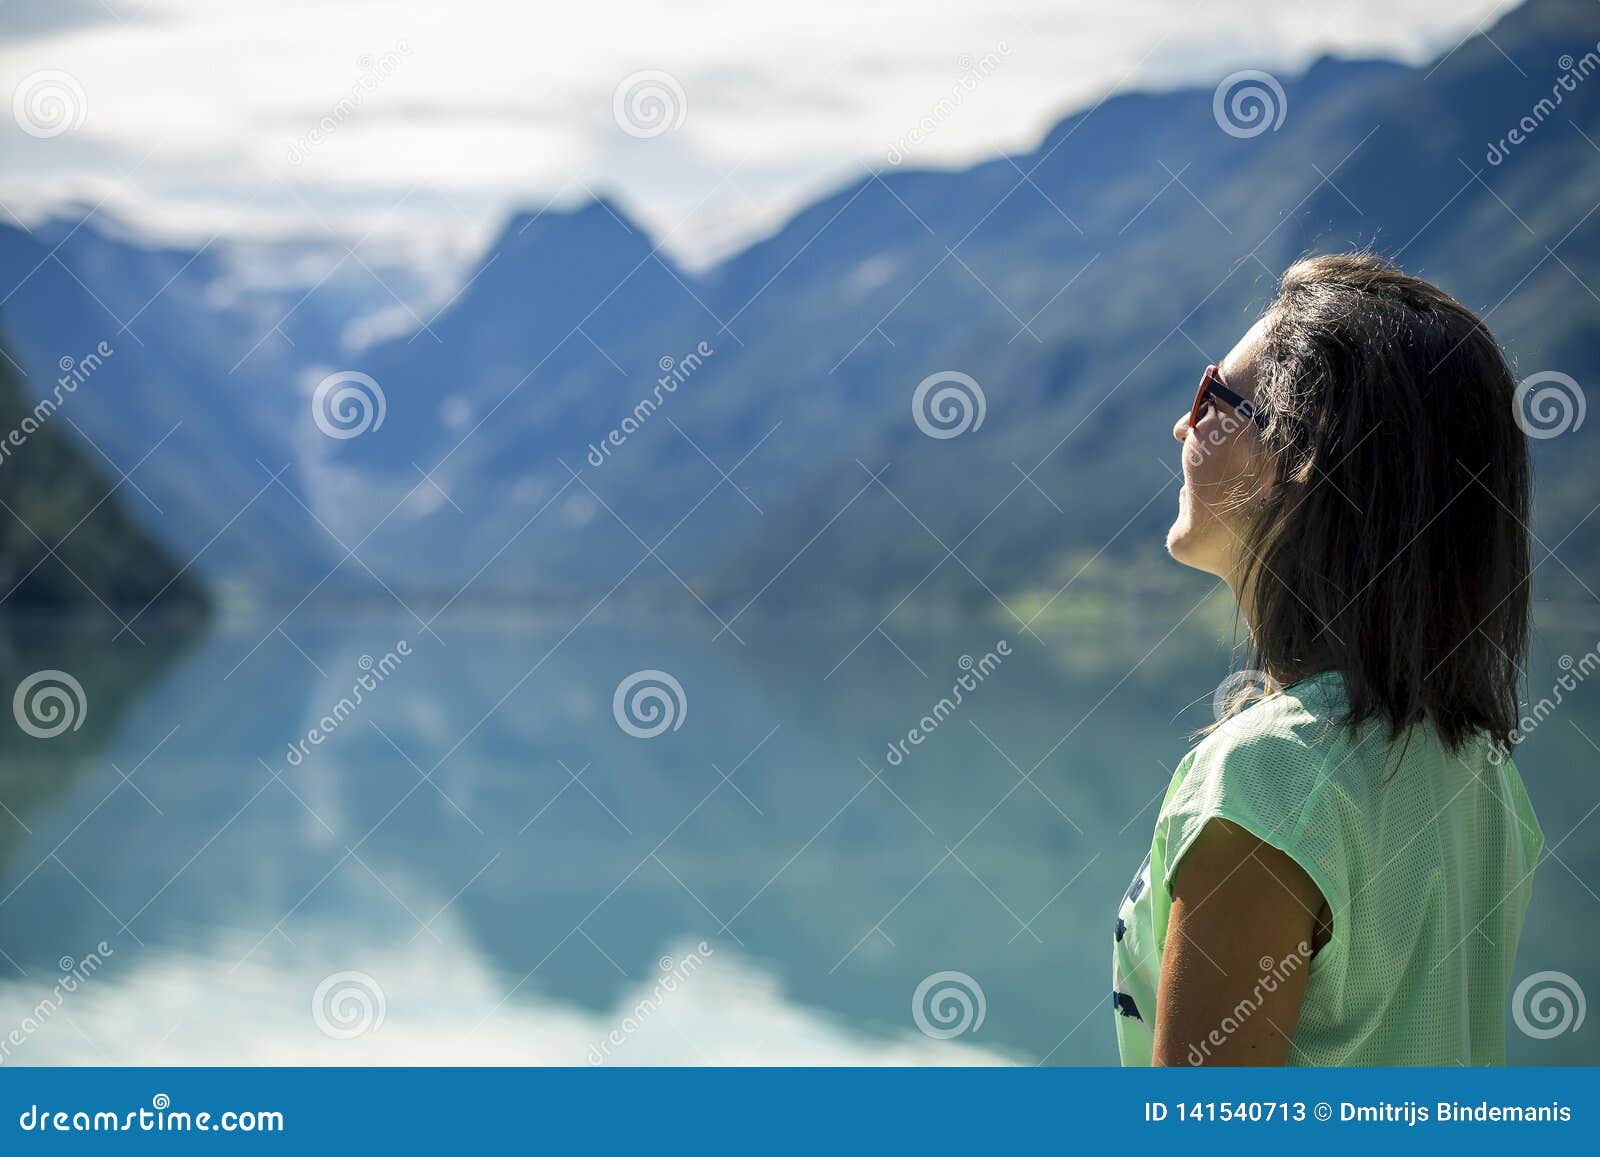 https://thumbs.dreamstime.com/z/portrait-young-beautiful-woman-standing-near-mountain-lake-norway-sunny-day-close-up-portrait-young-beautiful-woman-141540713.jpg